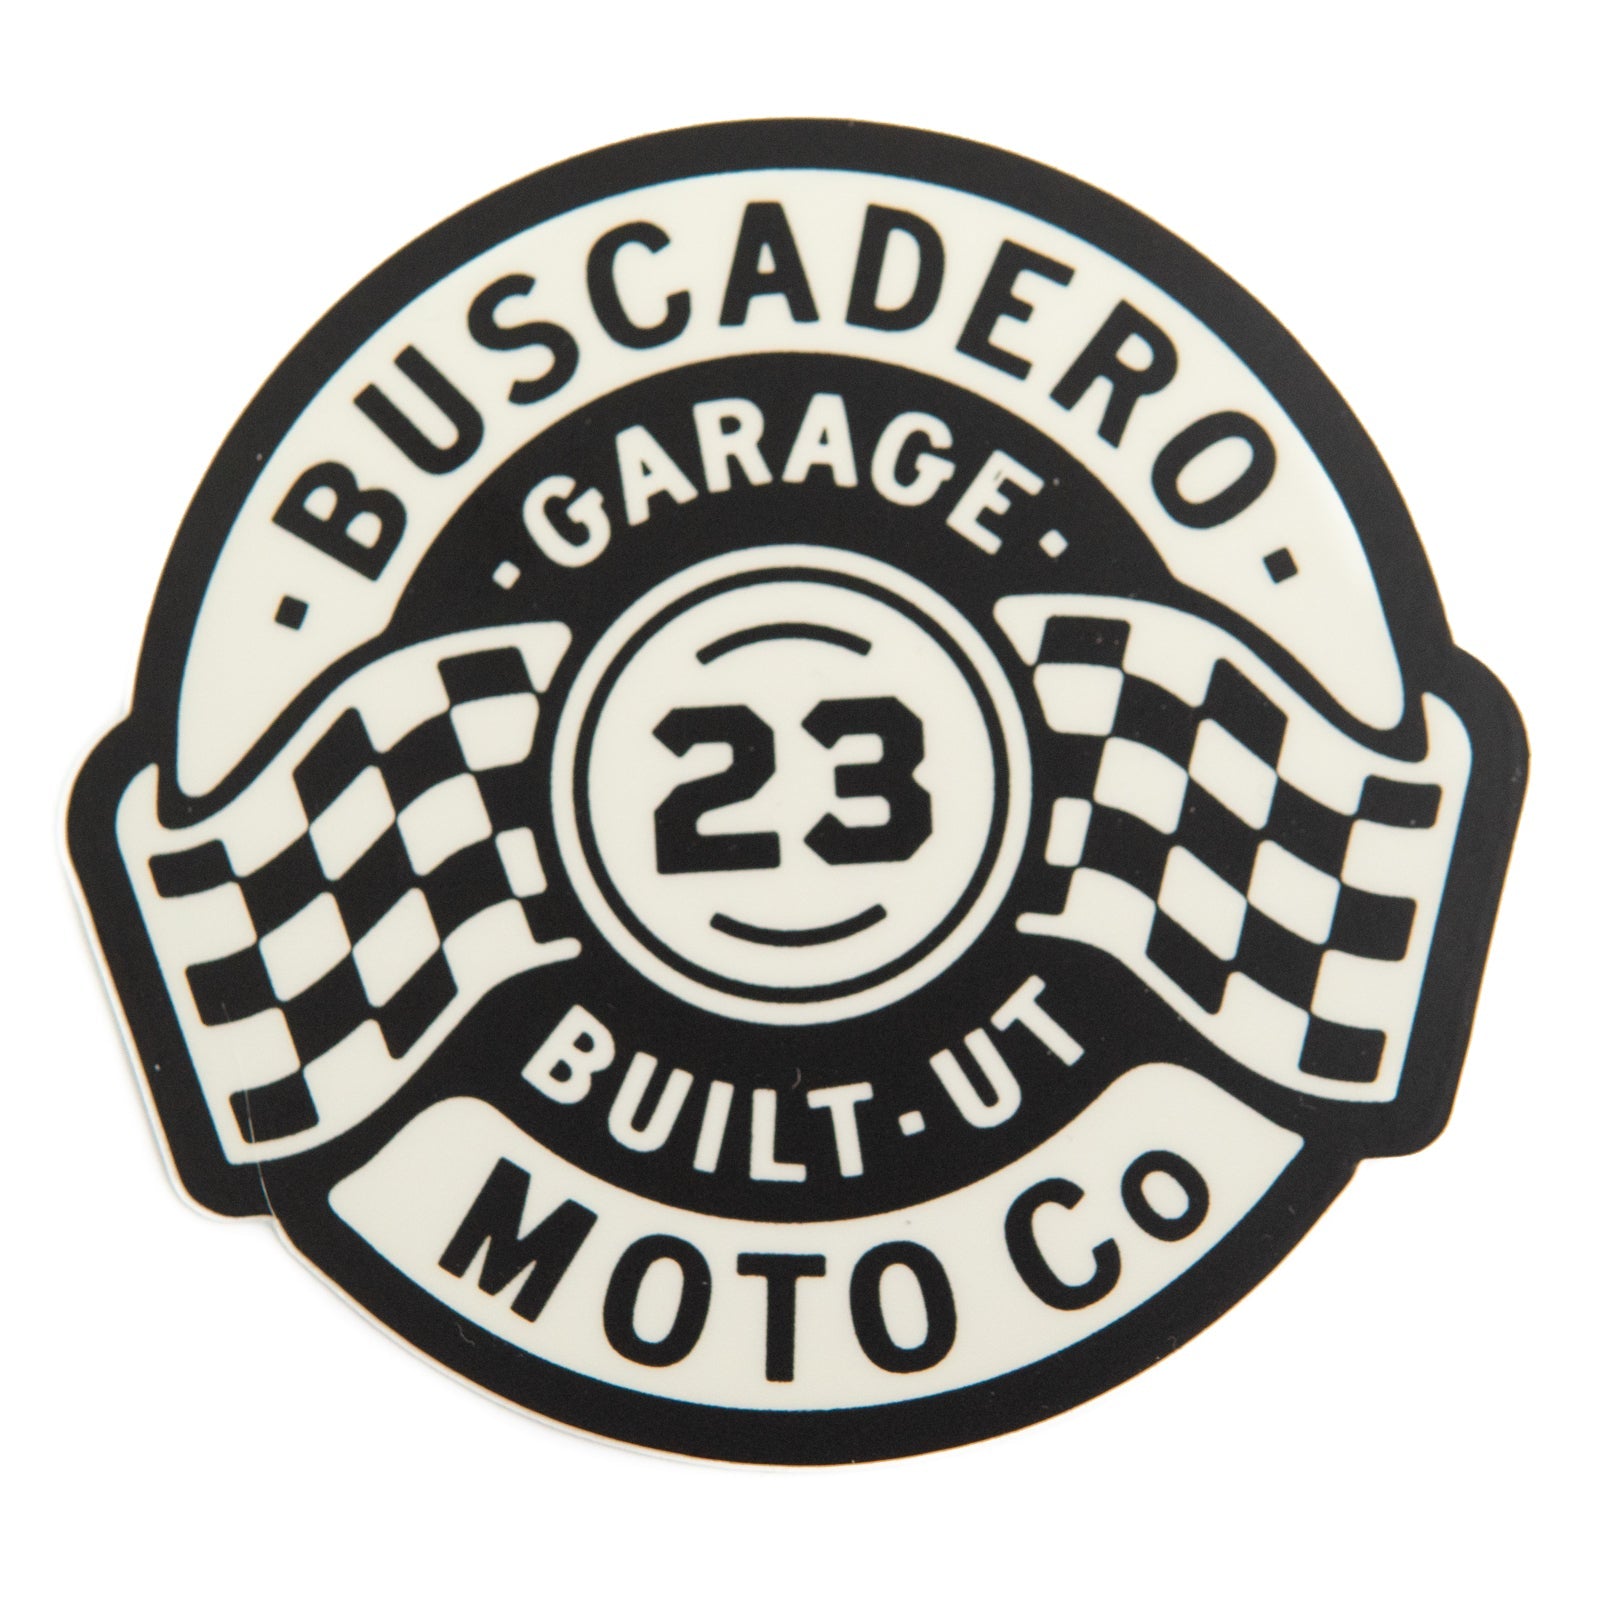 "Garage Built" decal - Buscadero Motorcycles